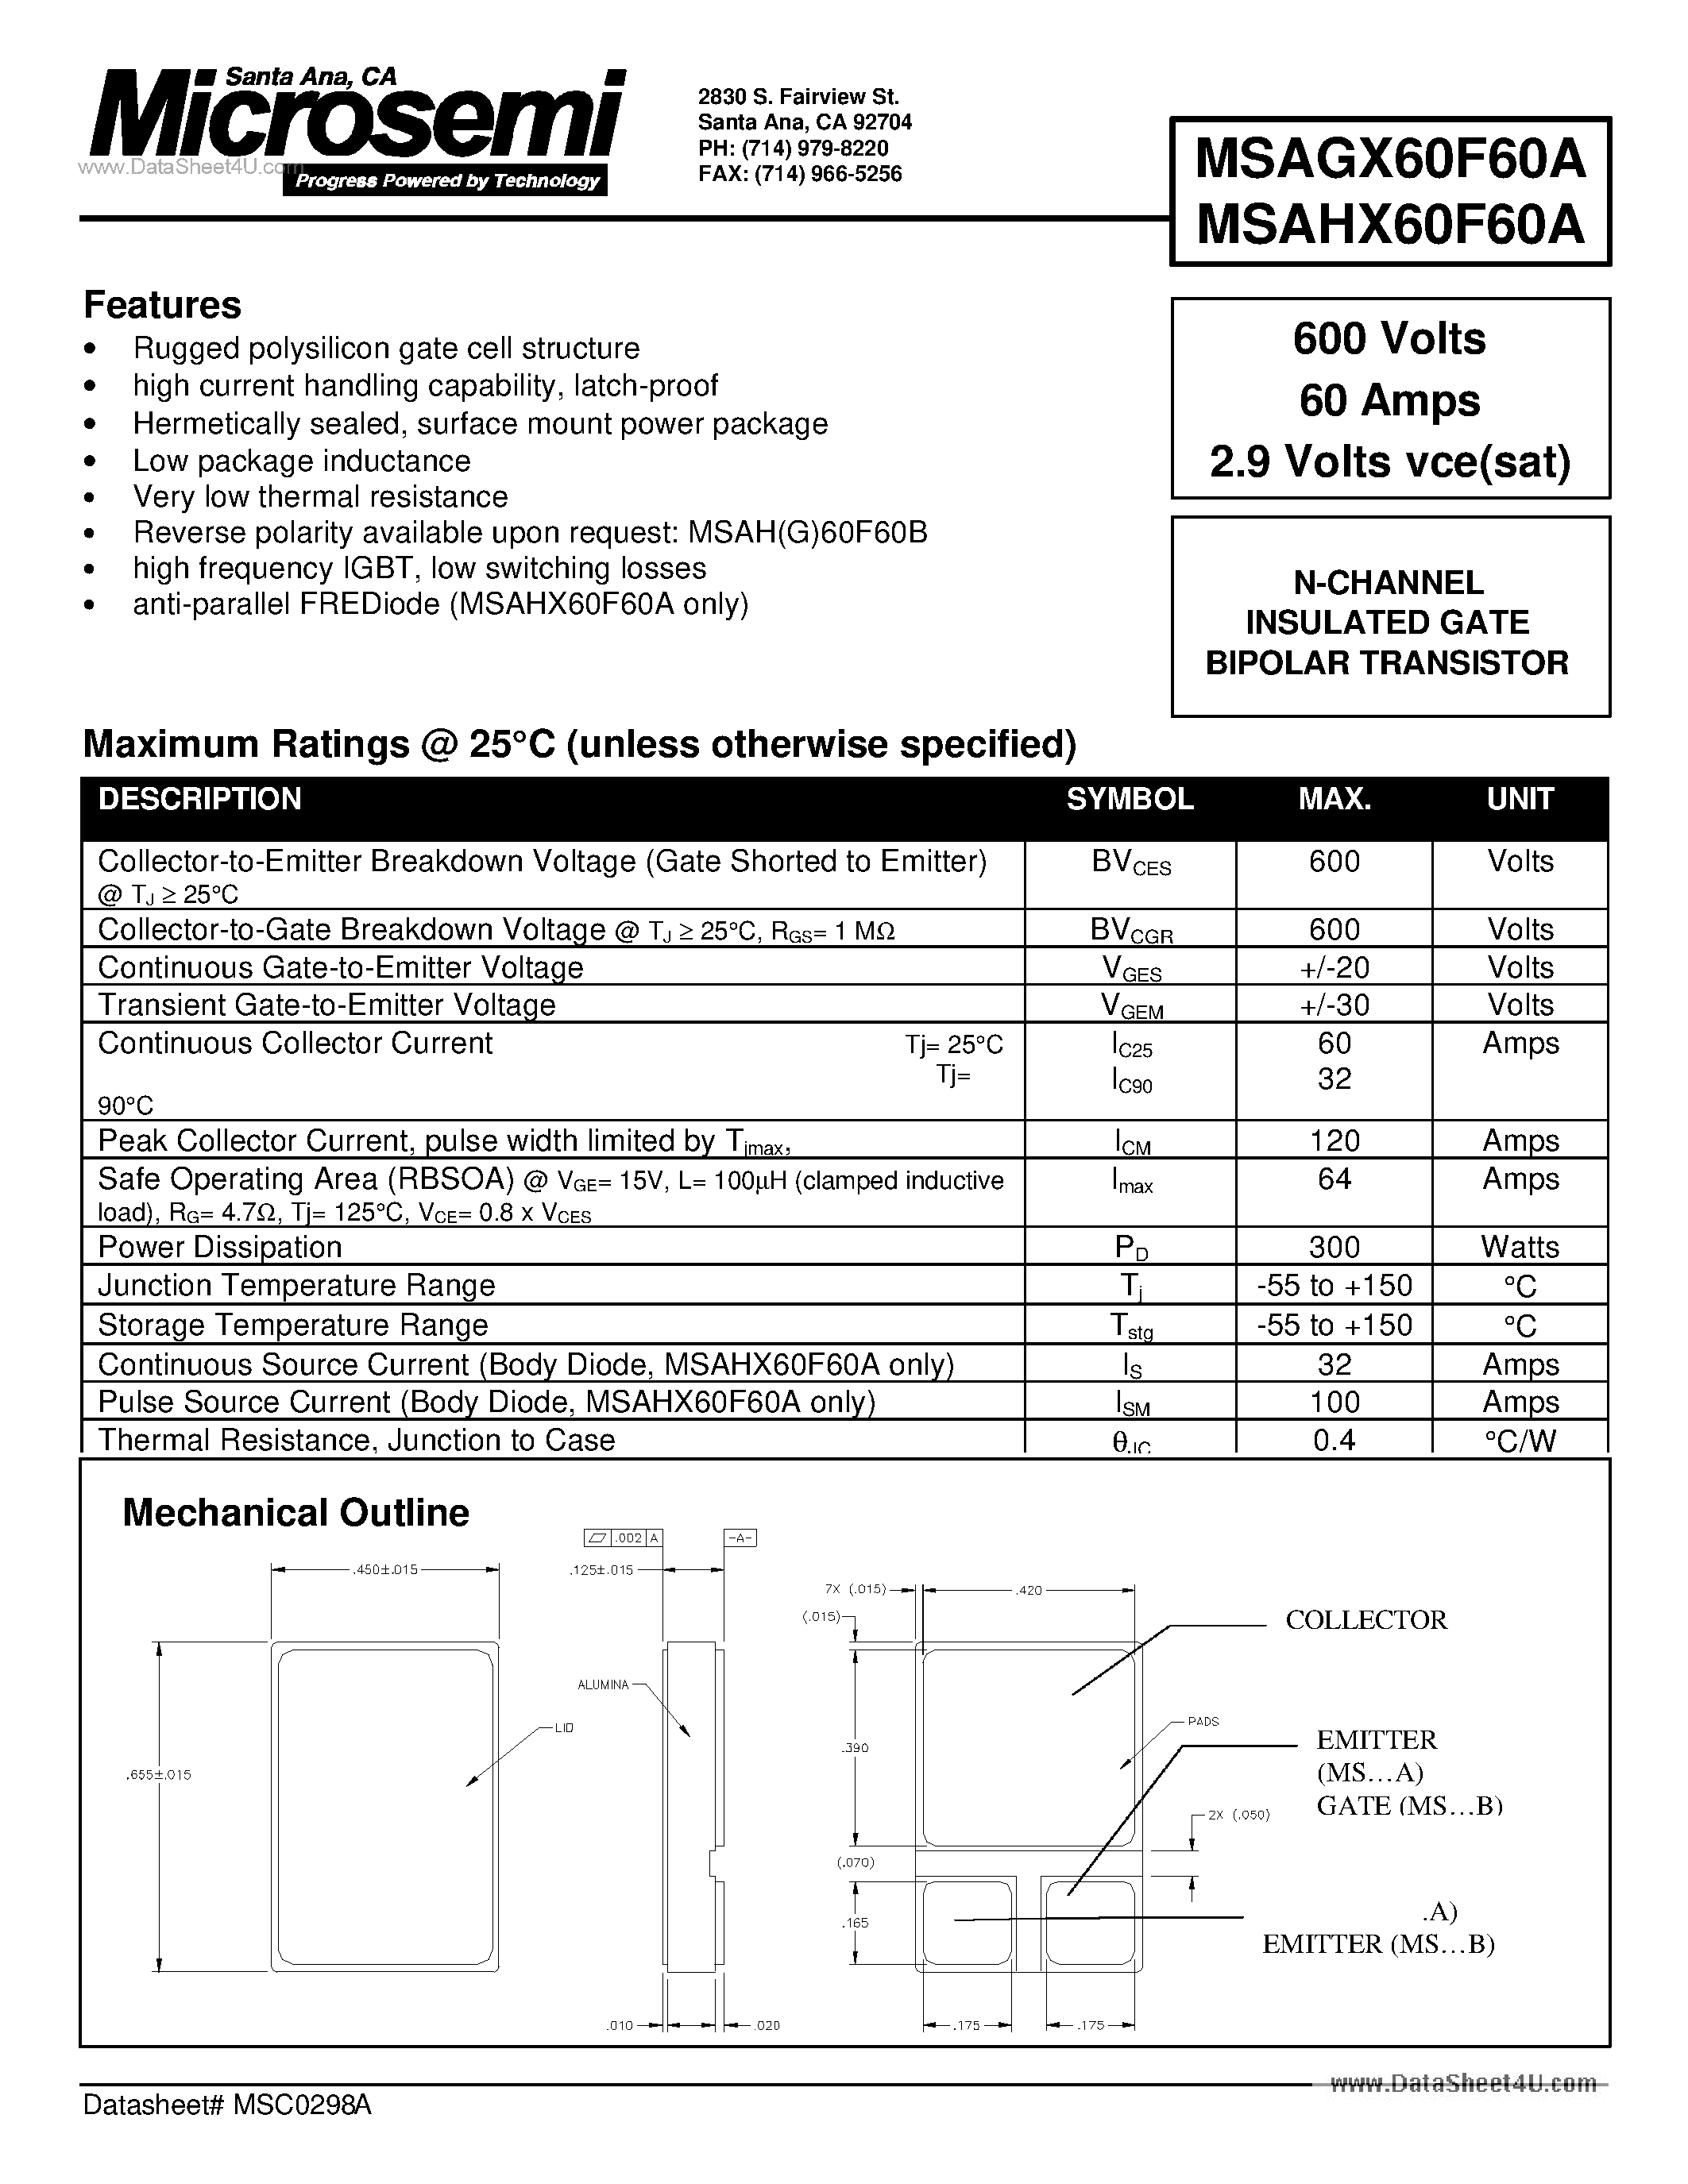 Datasheet MSAGX60F60A - N-CHANNEL INSULATED GATE BIPOLAR TRANSISTOR page 1